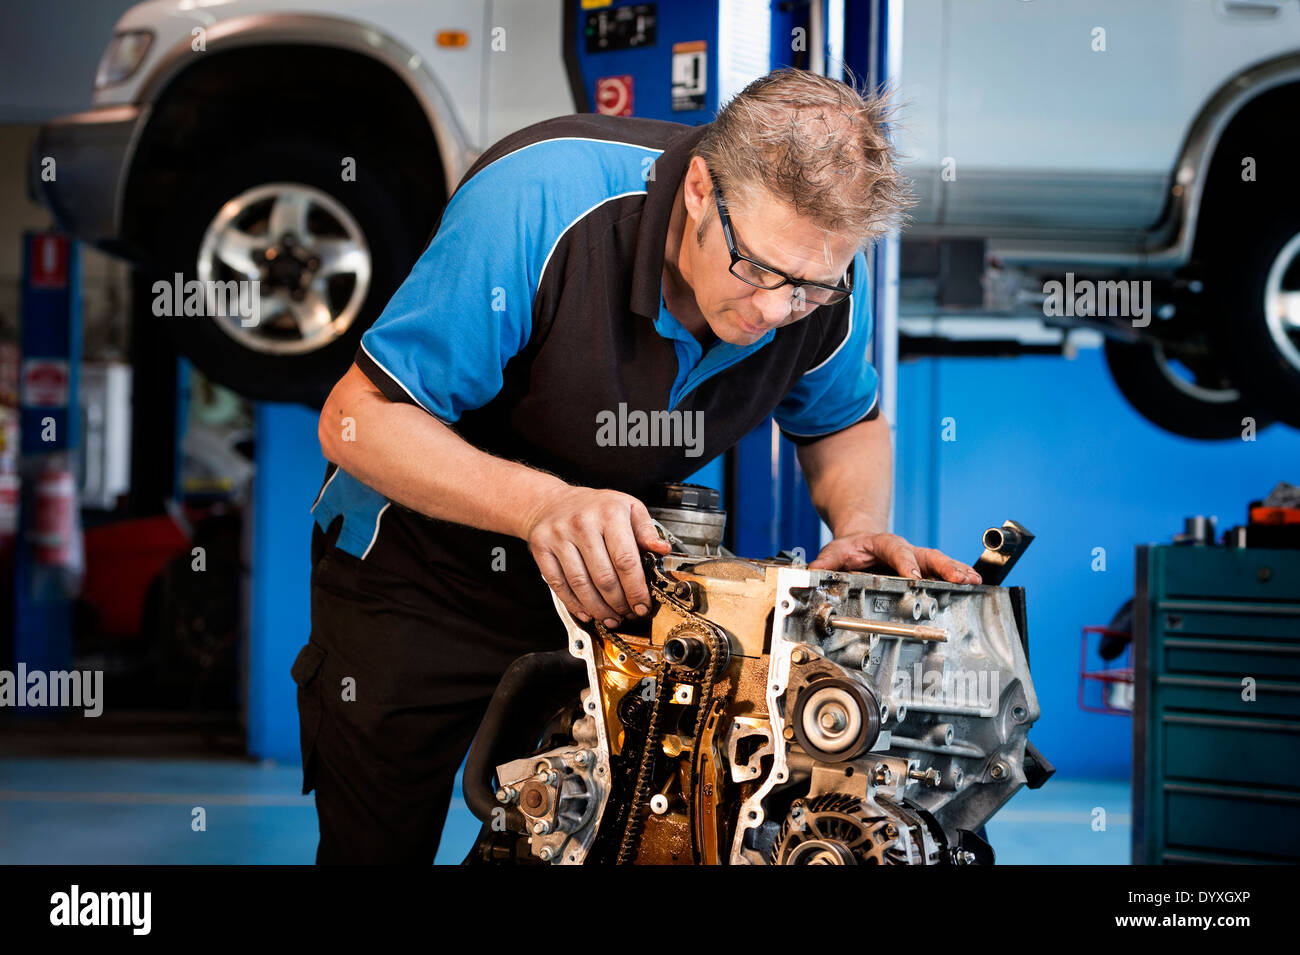 Mechanic working on a car engine Stock Photo